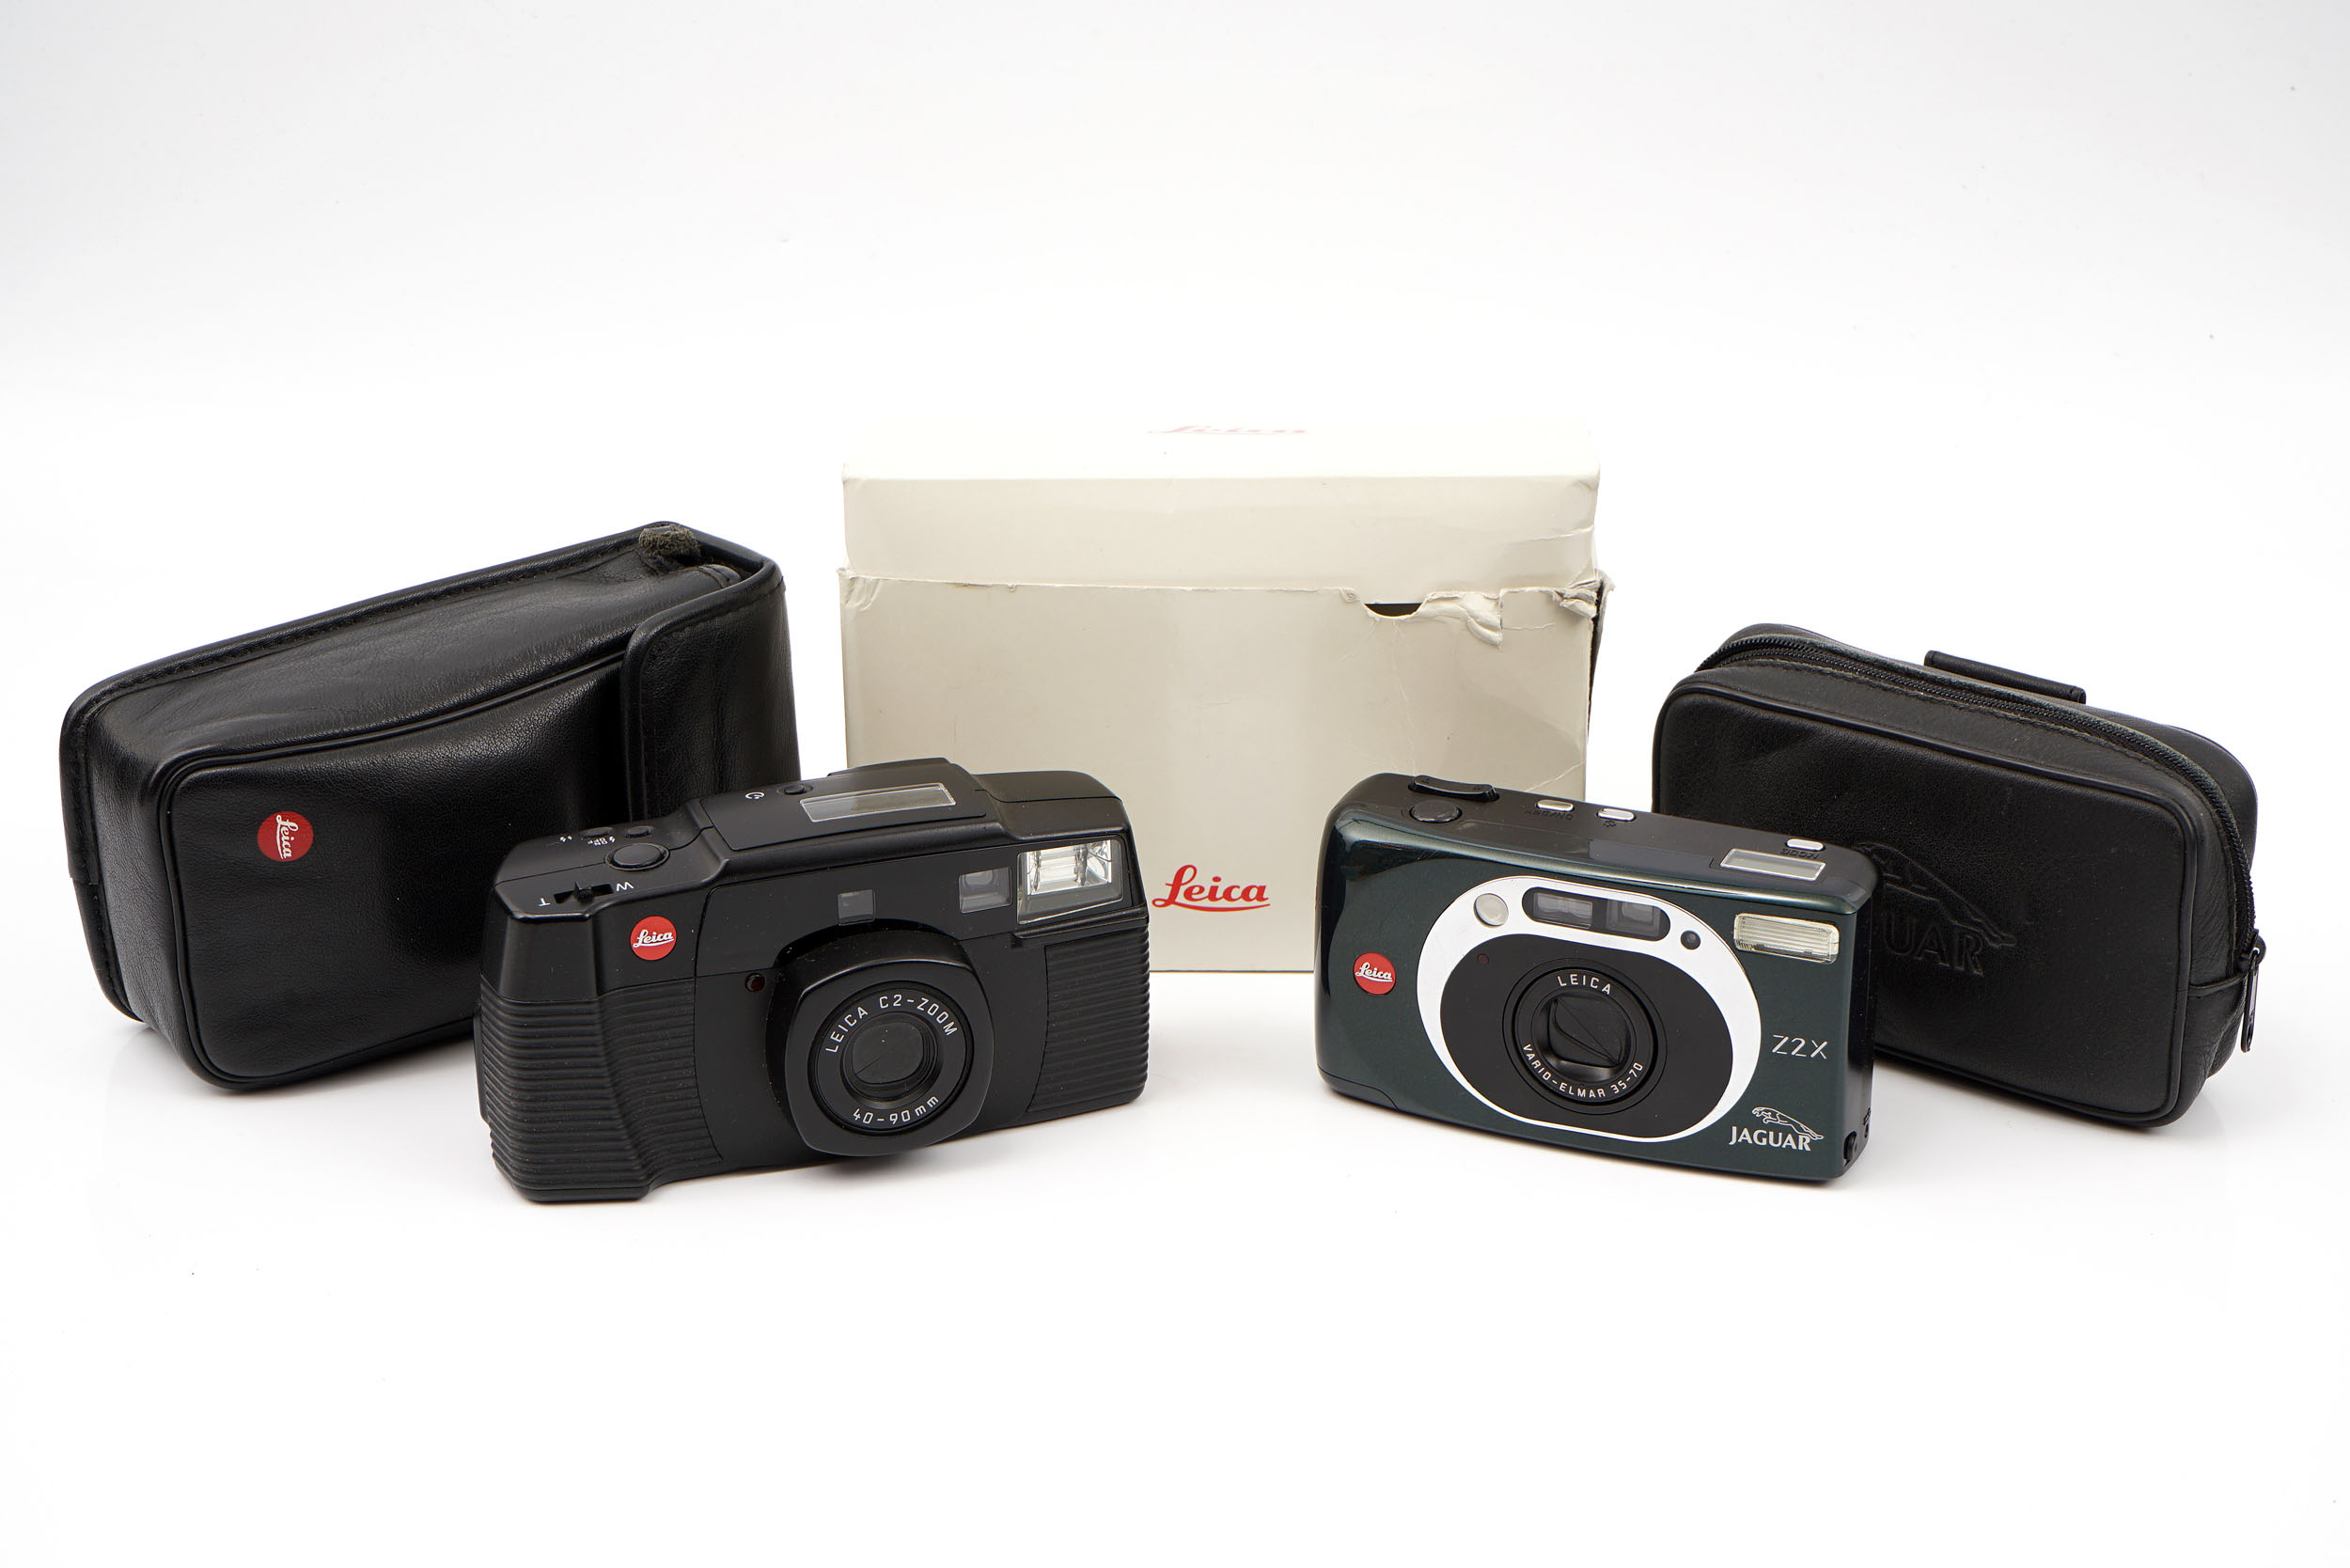 A Leica Jaguar Z2X Compact Camera,